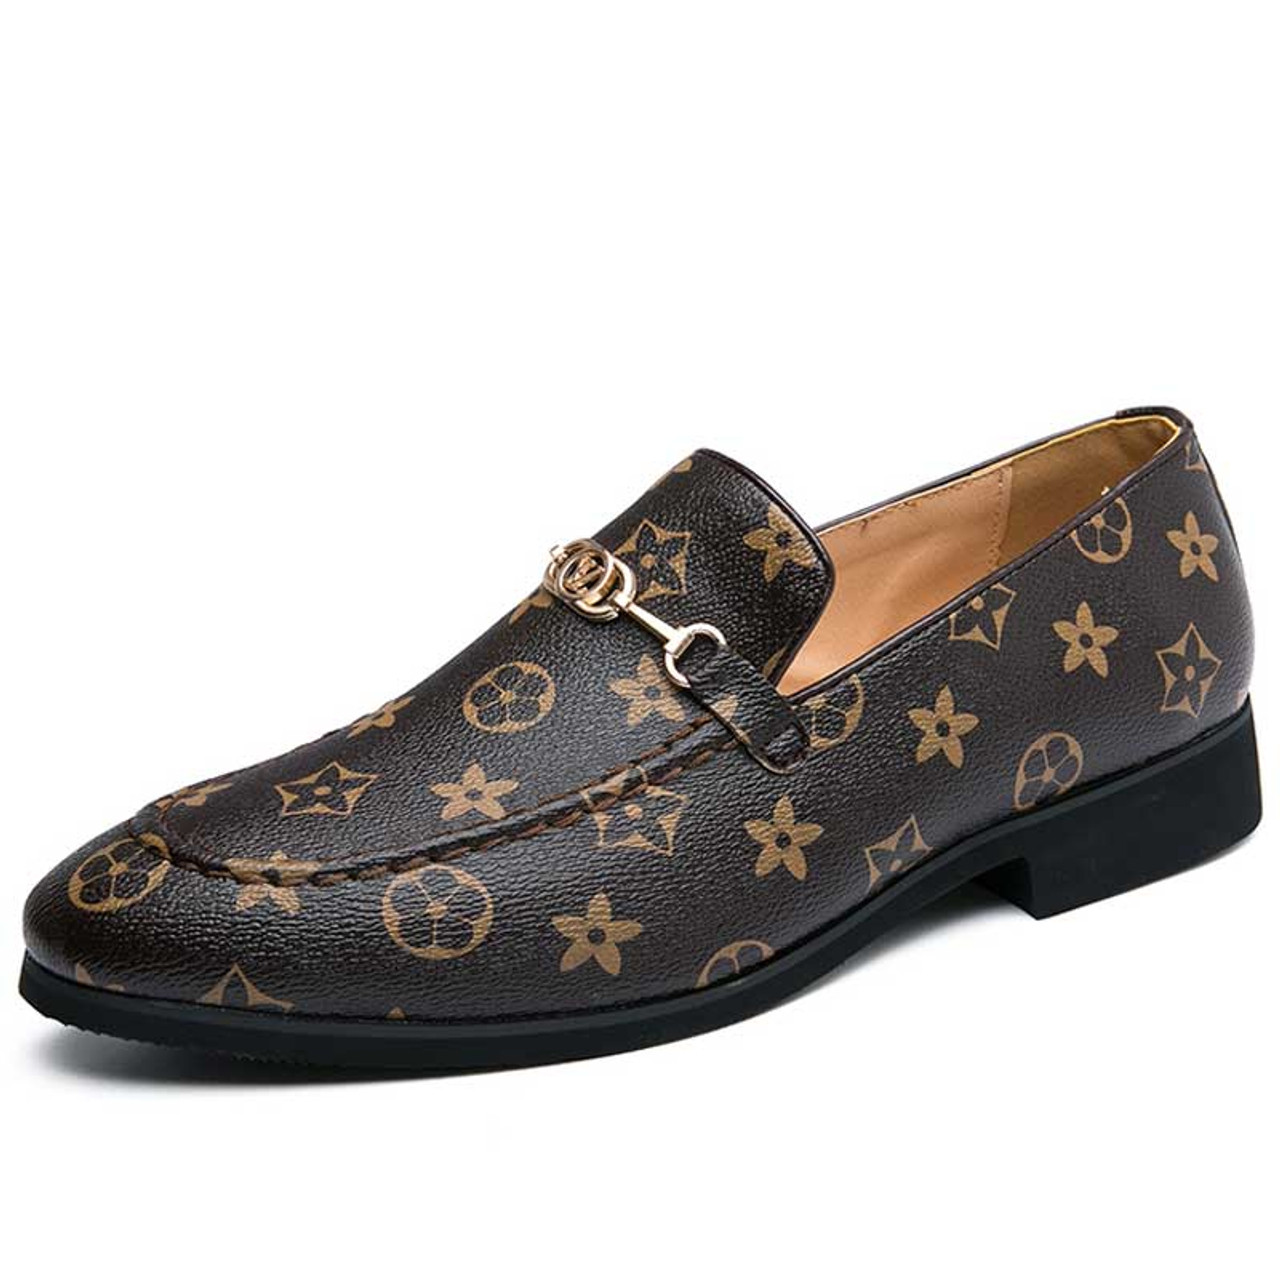 Louis Vuitton men slippers available - Arewa Fashion Style